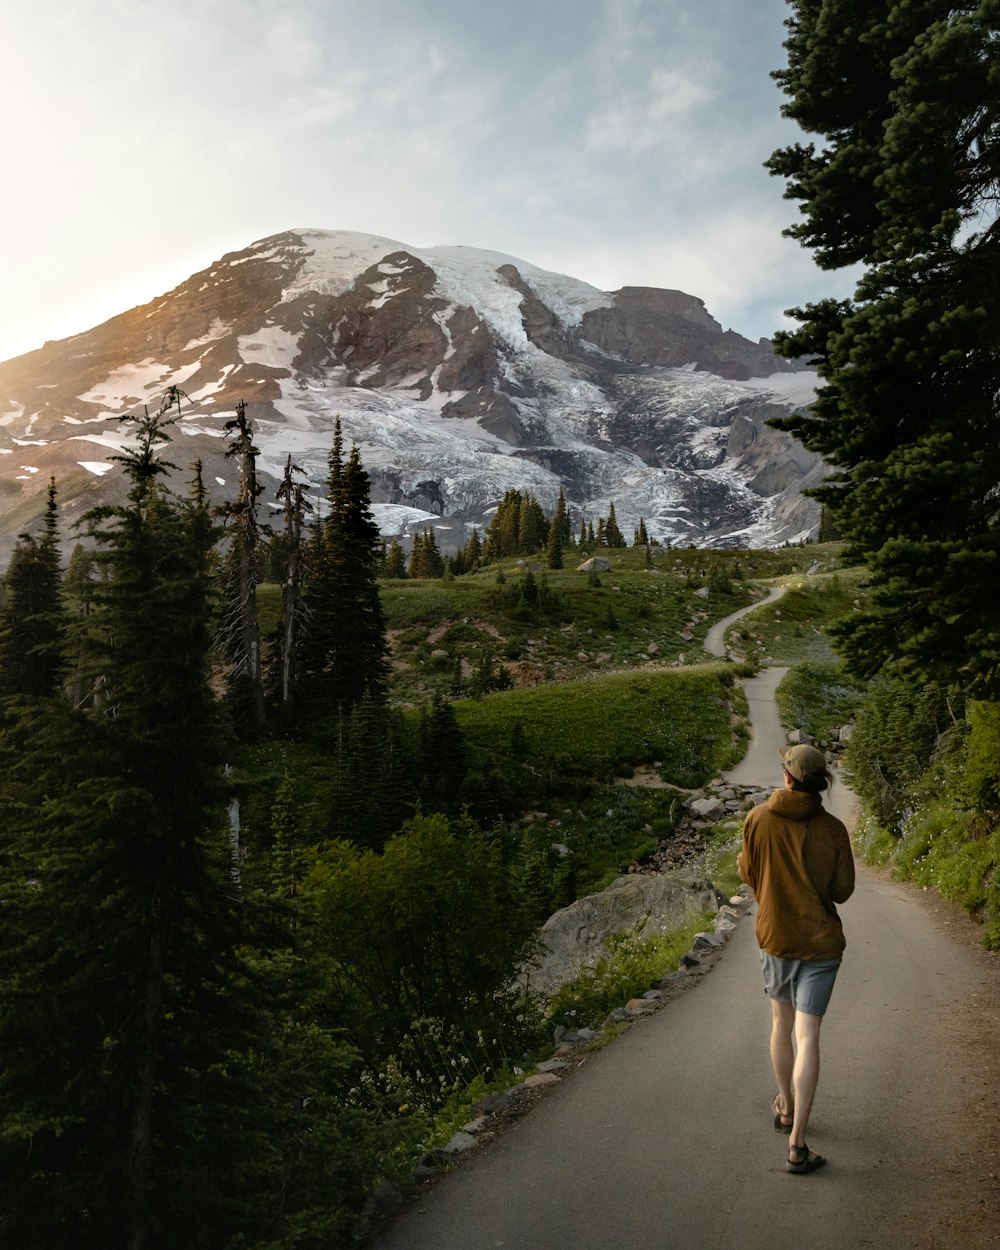 a person walking down a path towards a mountain